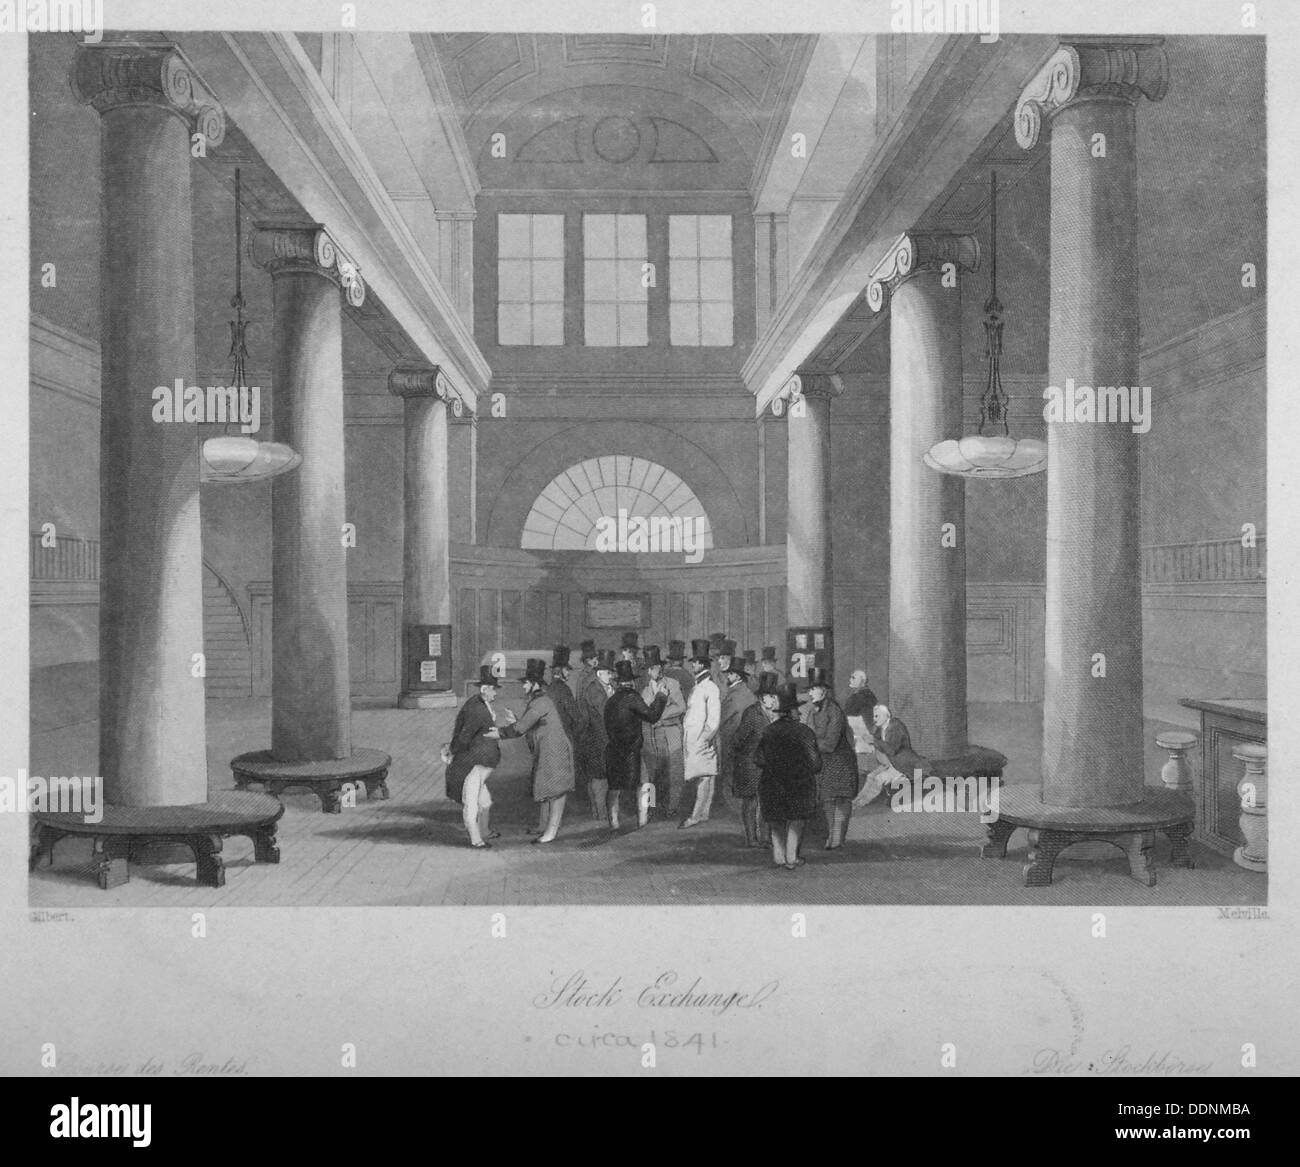 Interior view of the Stock Exchange, Bartholomew Lane, City of London, 1841. Artist: Harlen Melville Stock Photo